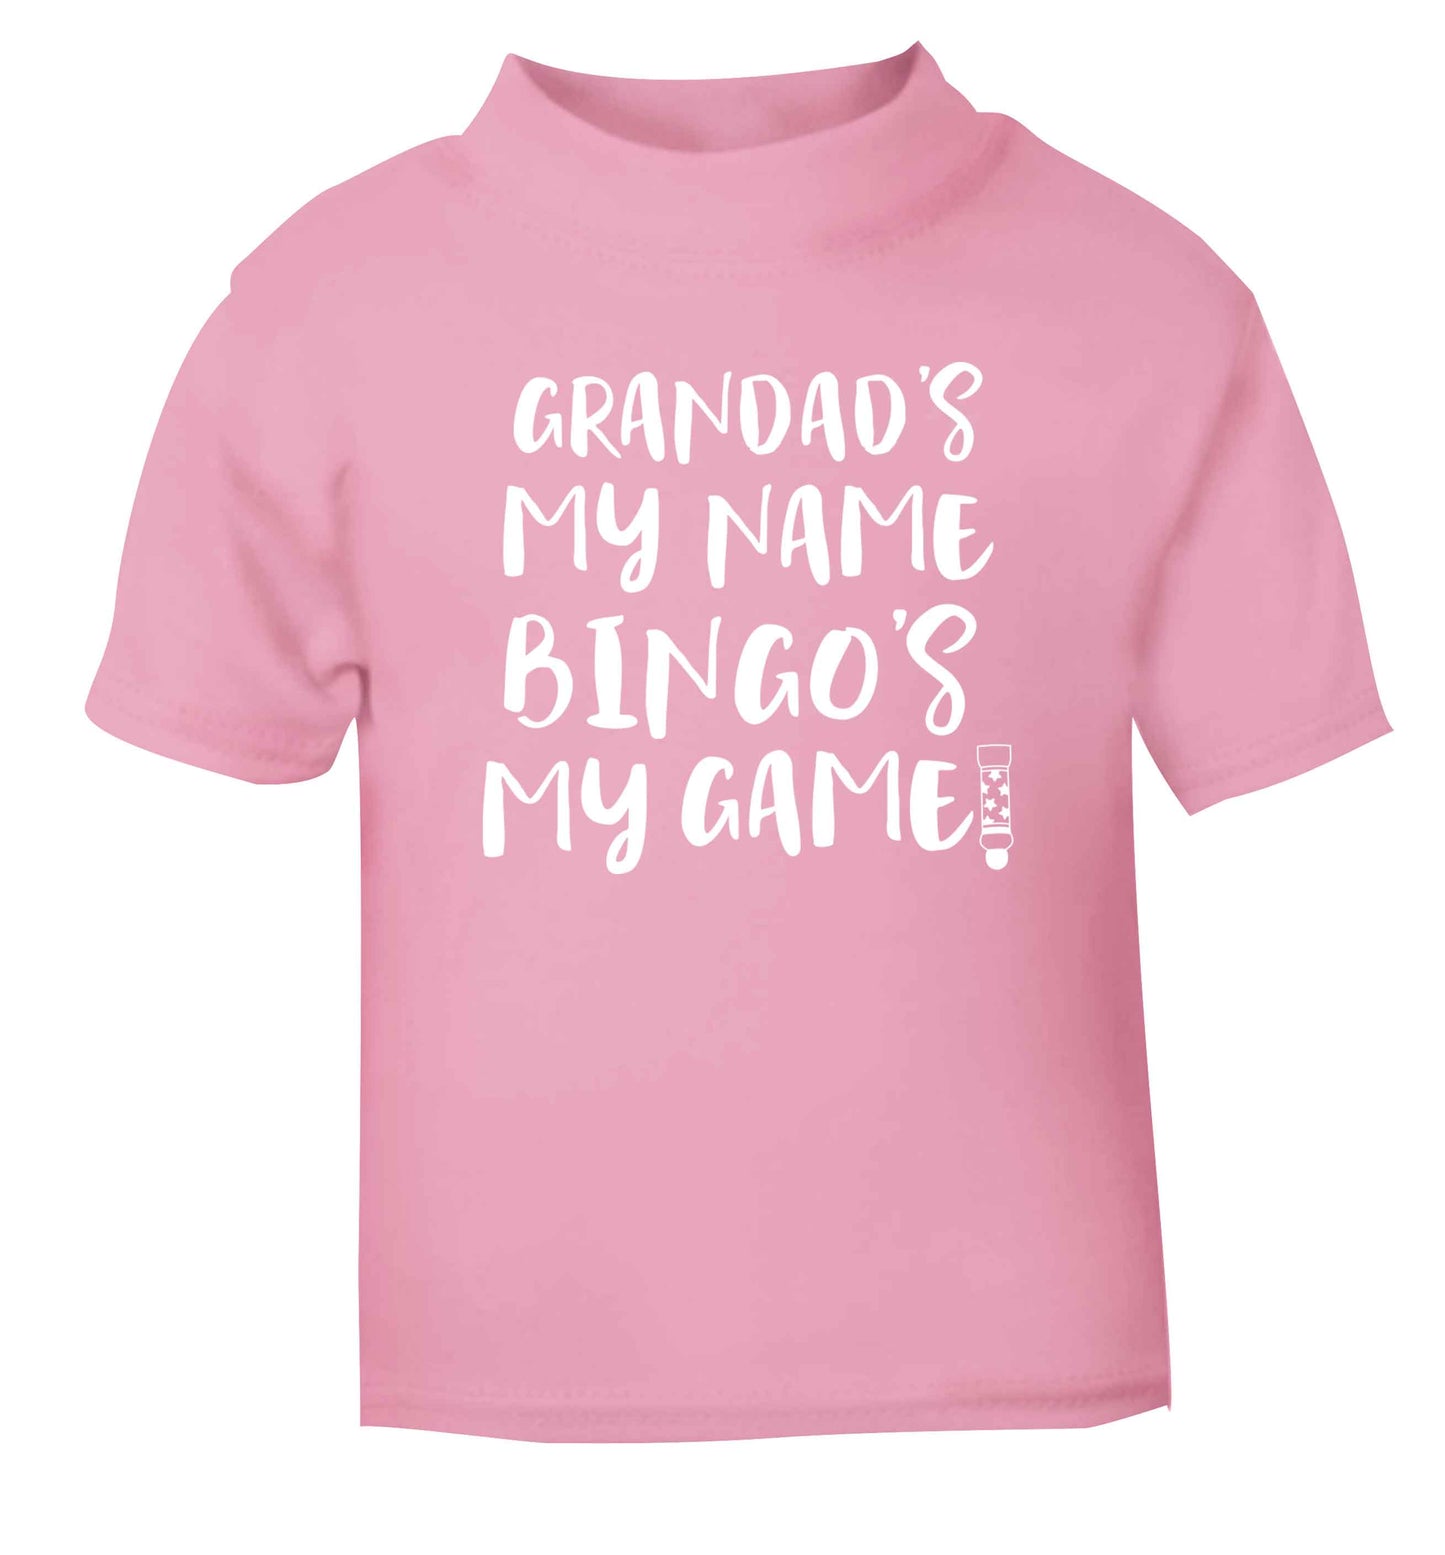 Grandad's my name bingo's my game! light pink Baby Toddler Tshirt 2 Years